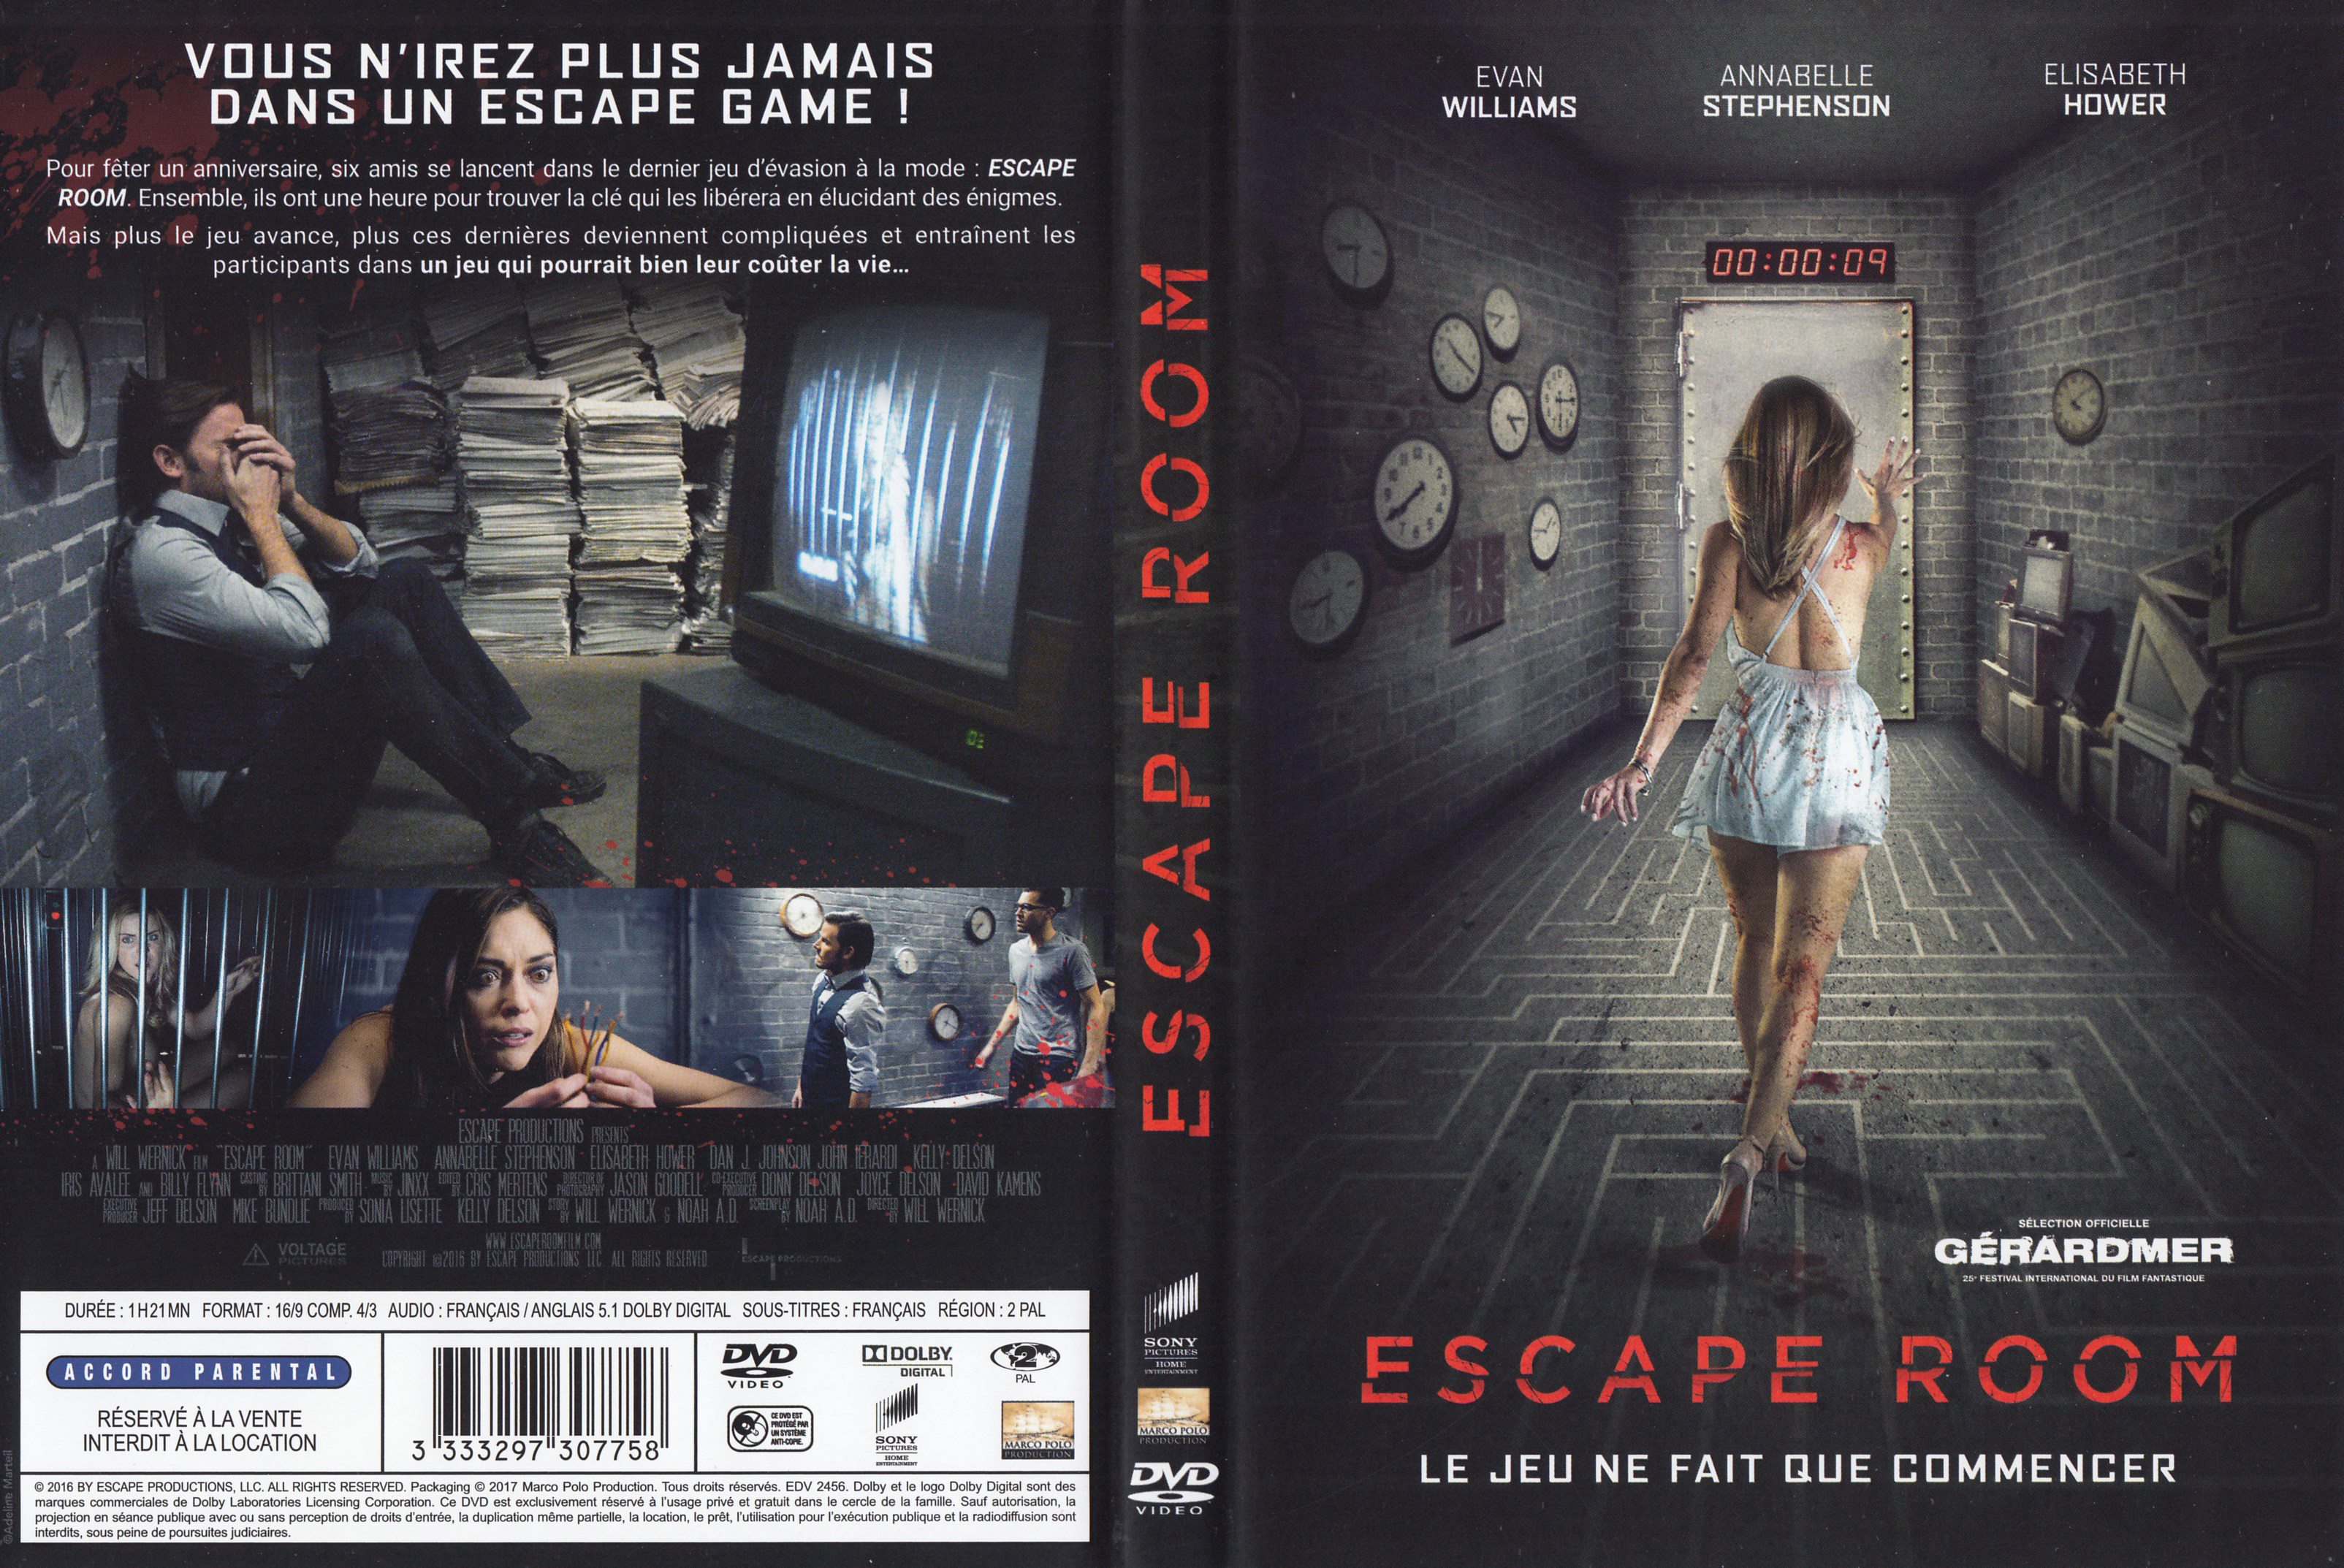 Jaquette DVD Escape room